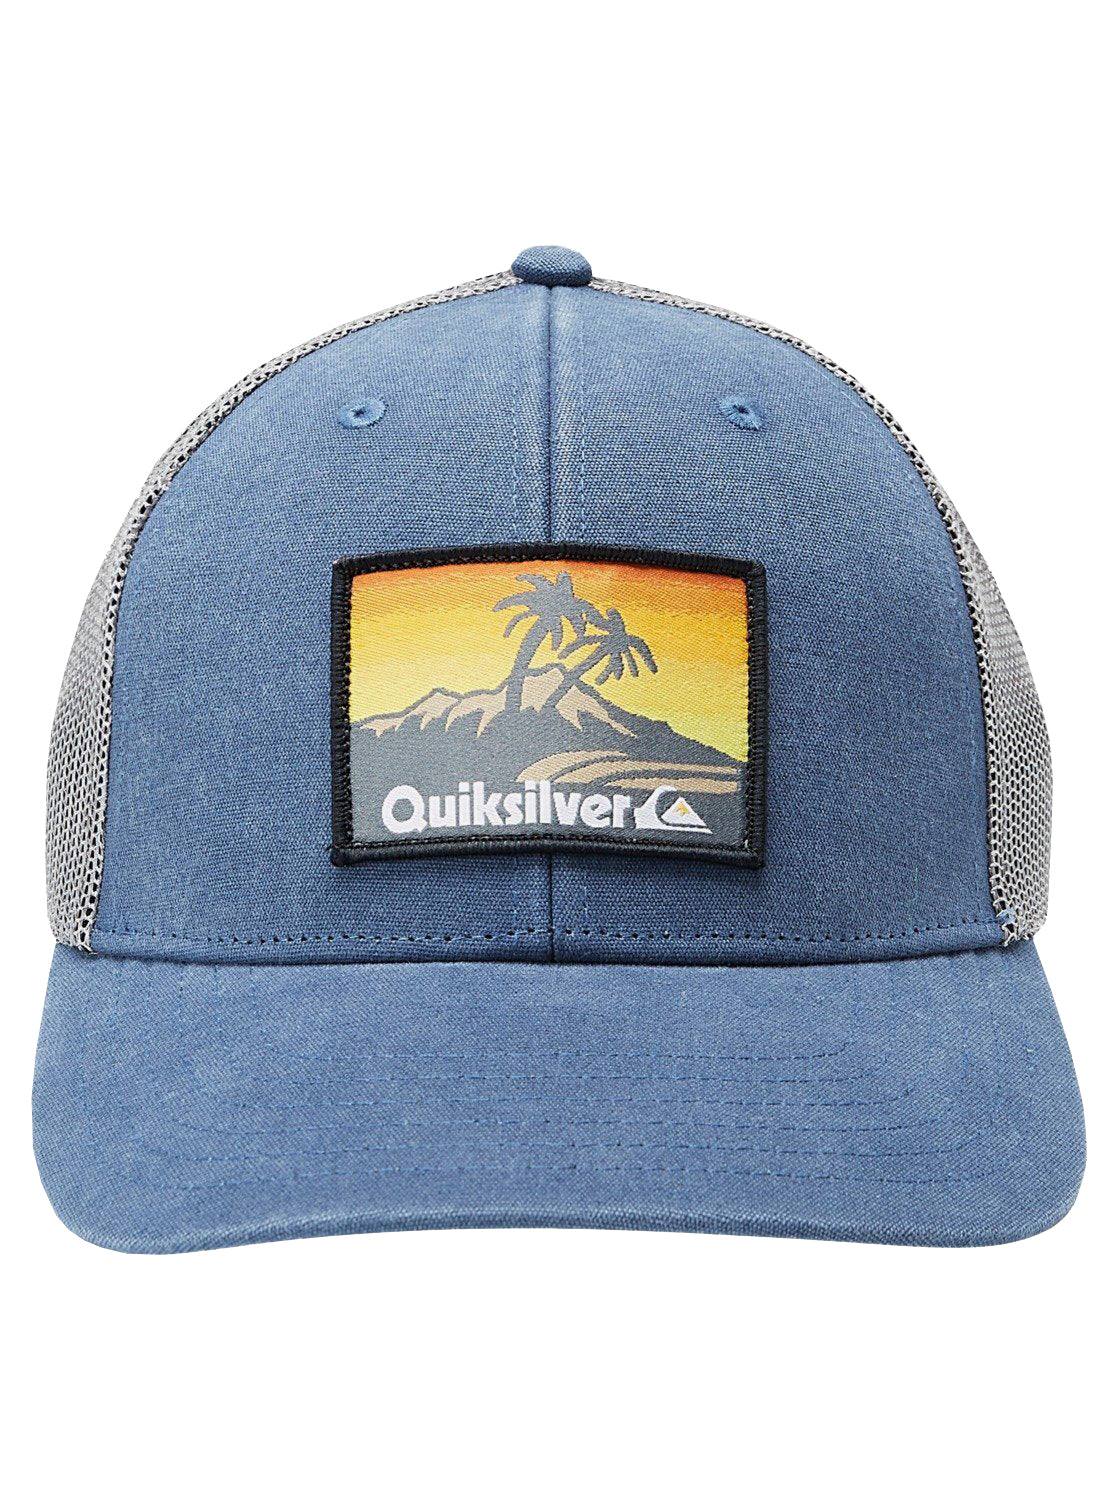 Quiksilver Clean Meanie Snapback Hat